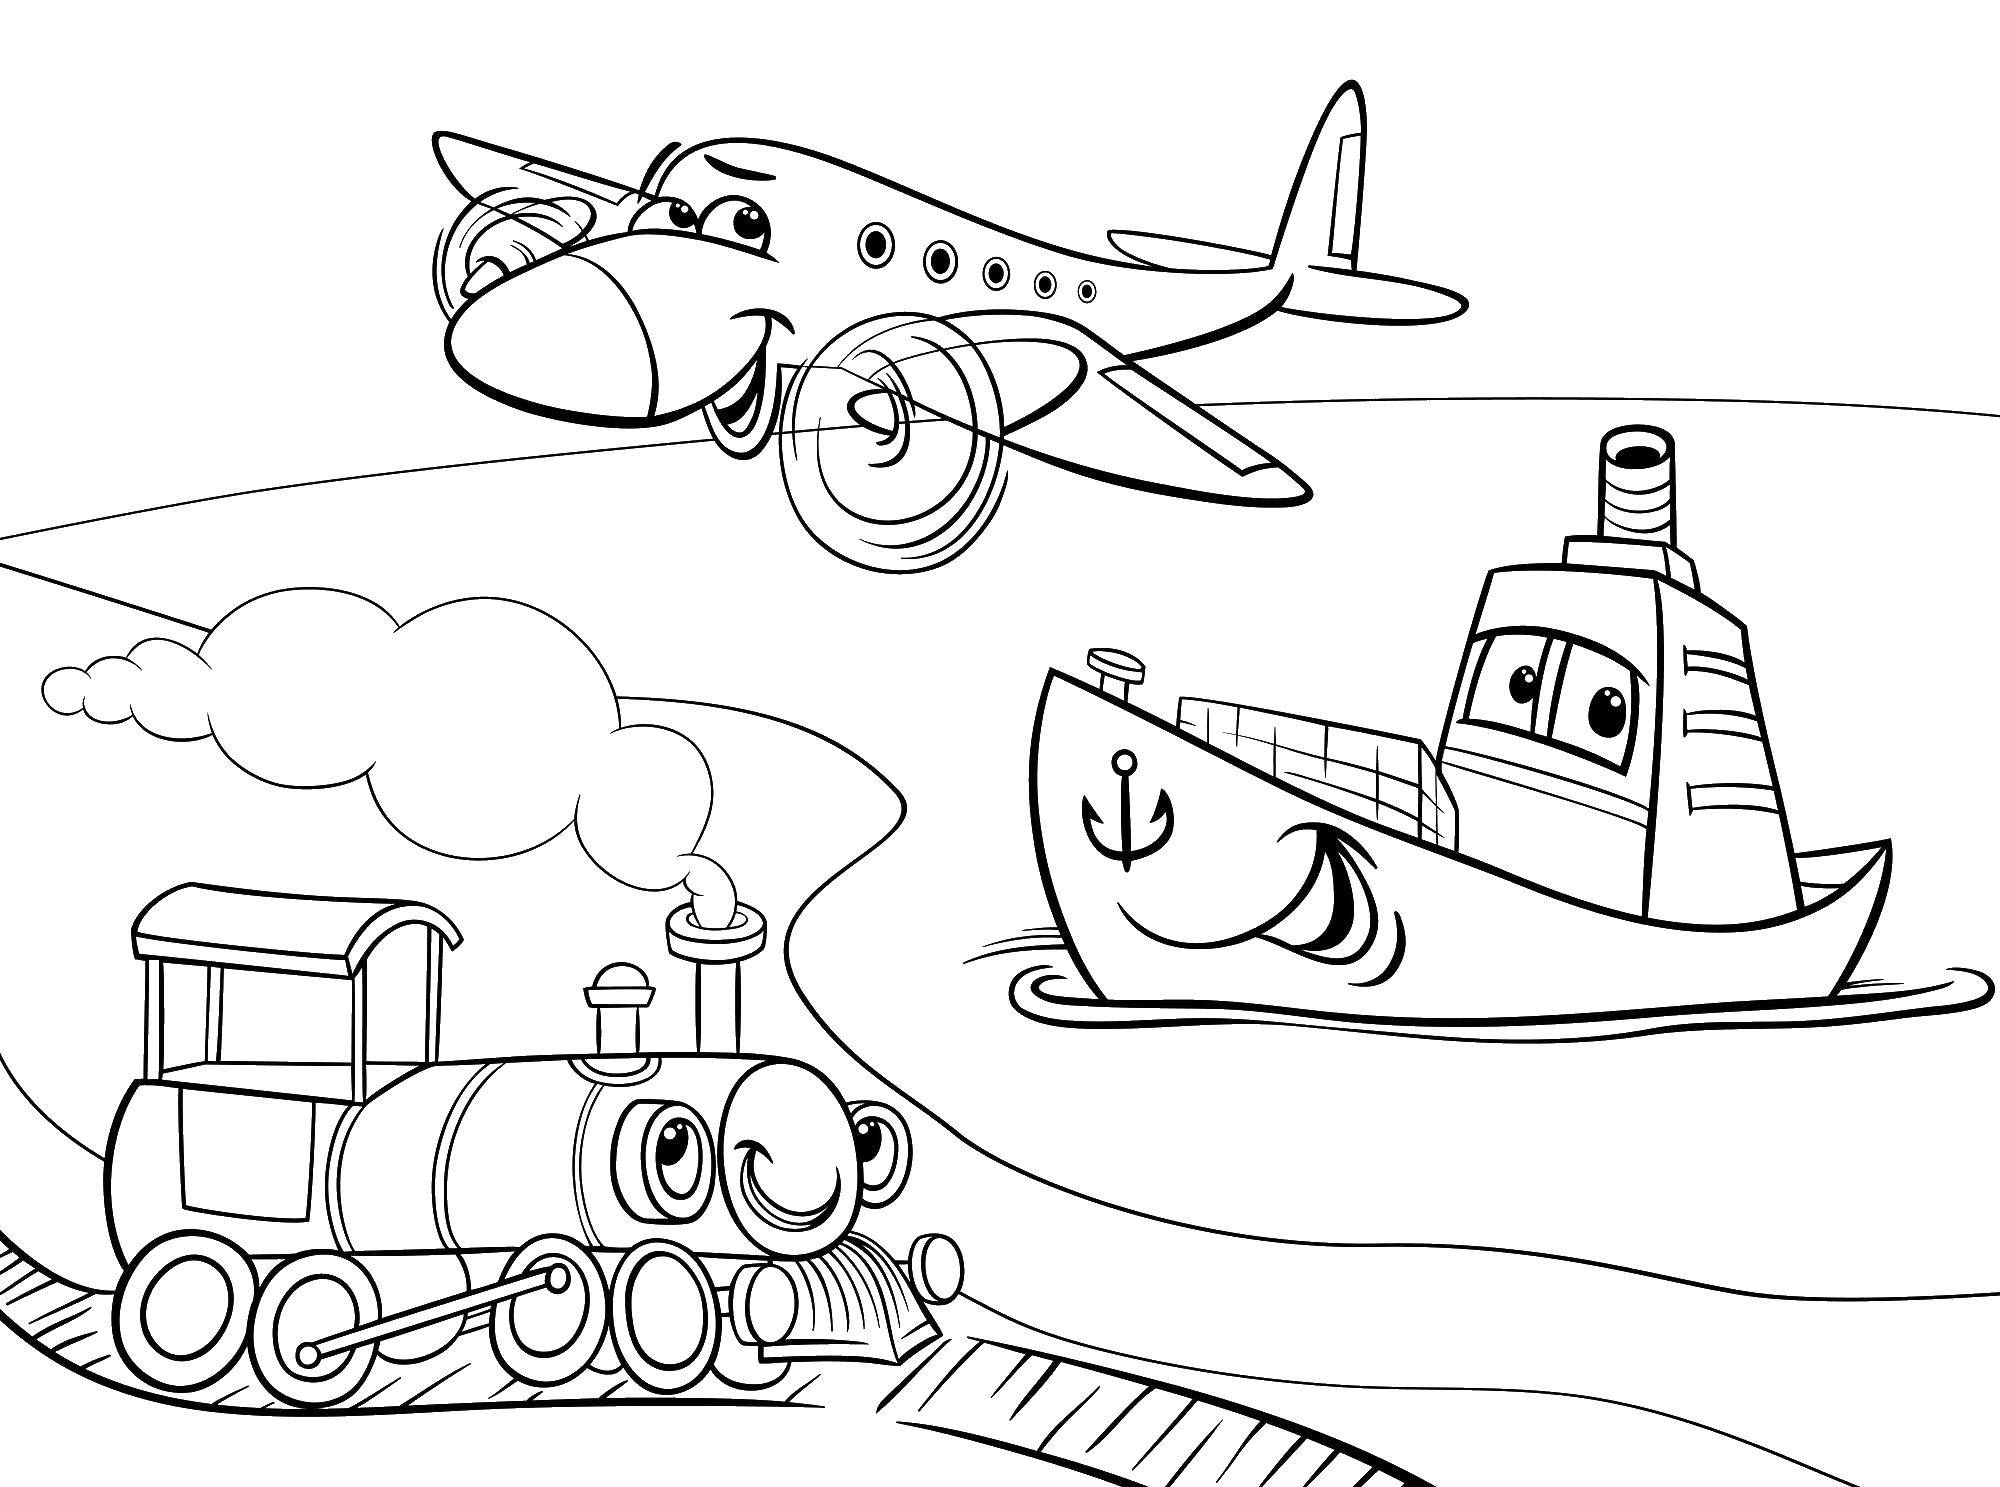 Coloring Train, ship, plane. Category transportation. Tags:  transportation.